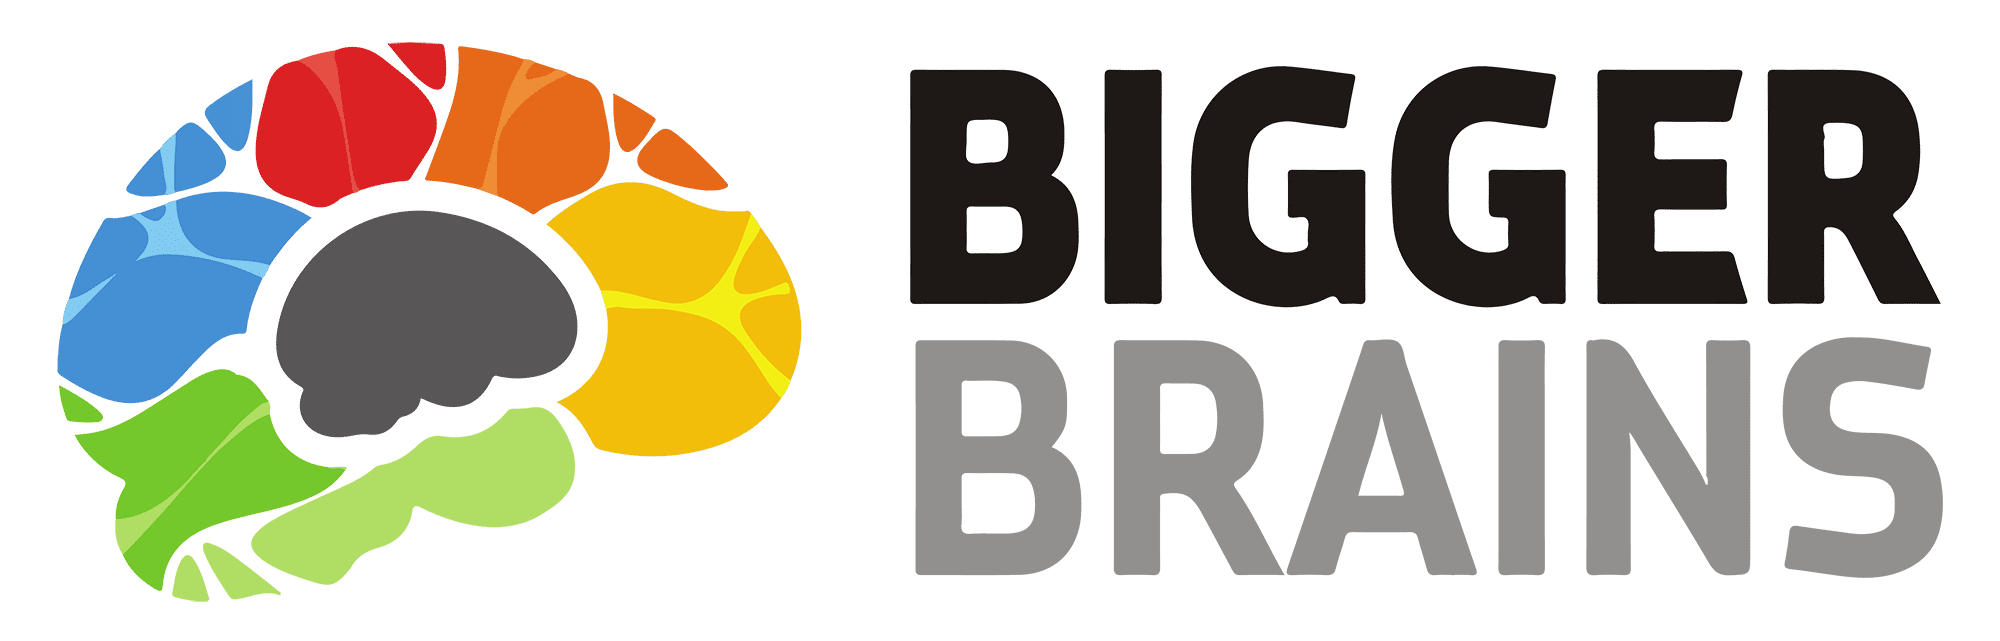 eLearning - Bigger Brains Logo